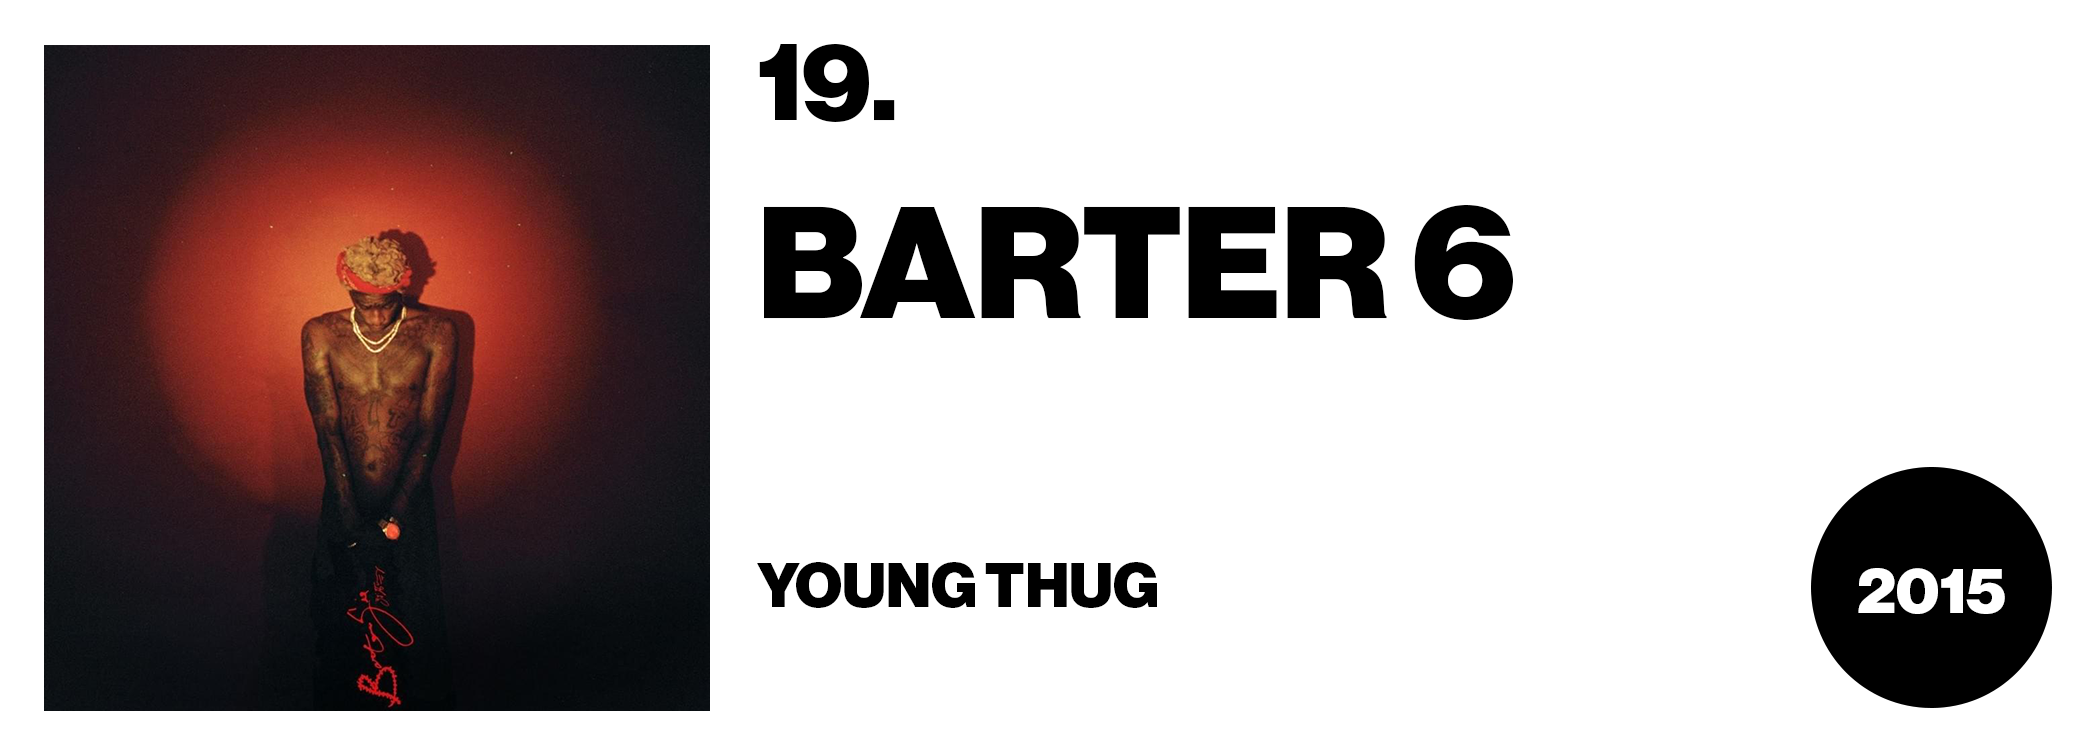 young thug barter 6 torrent